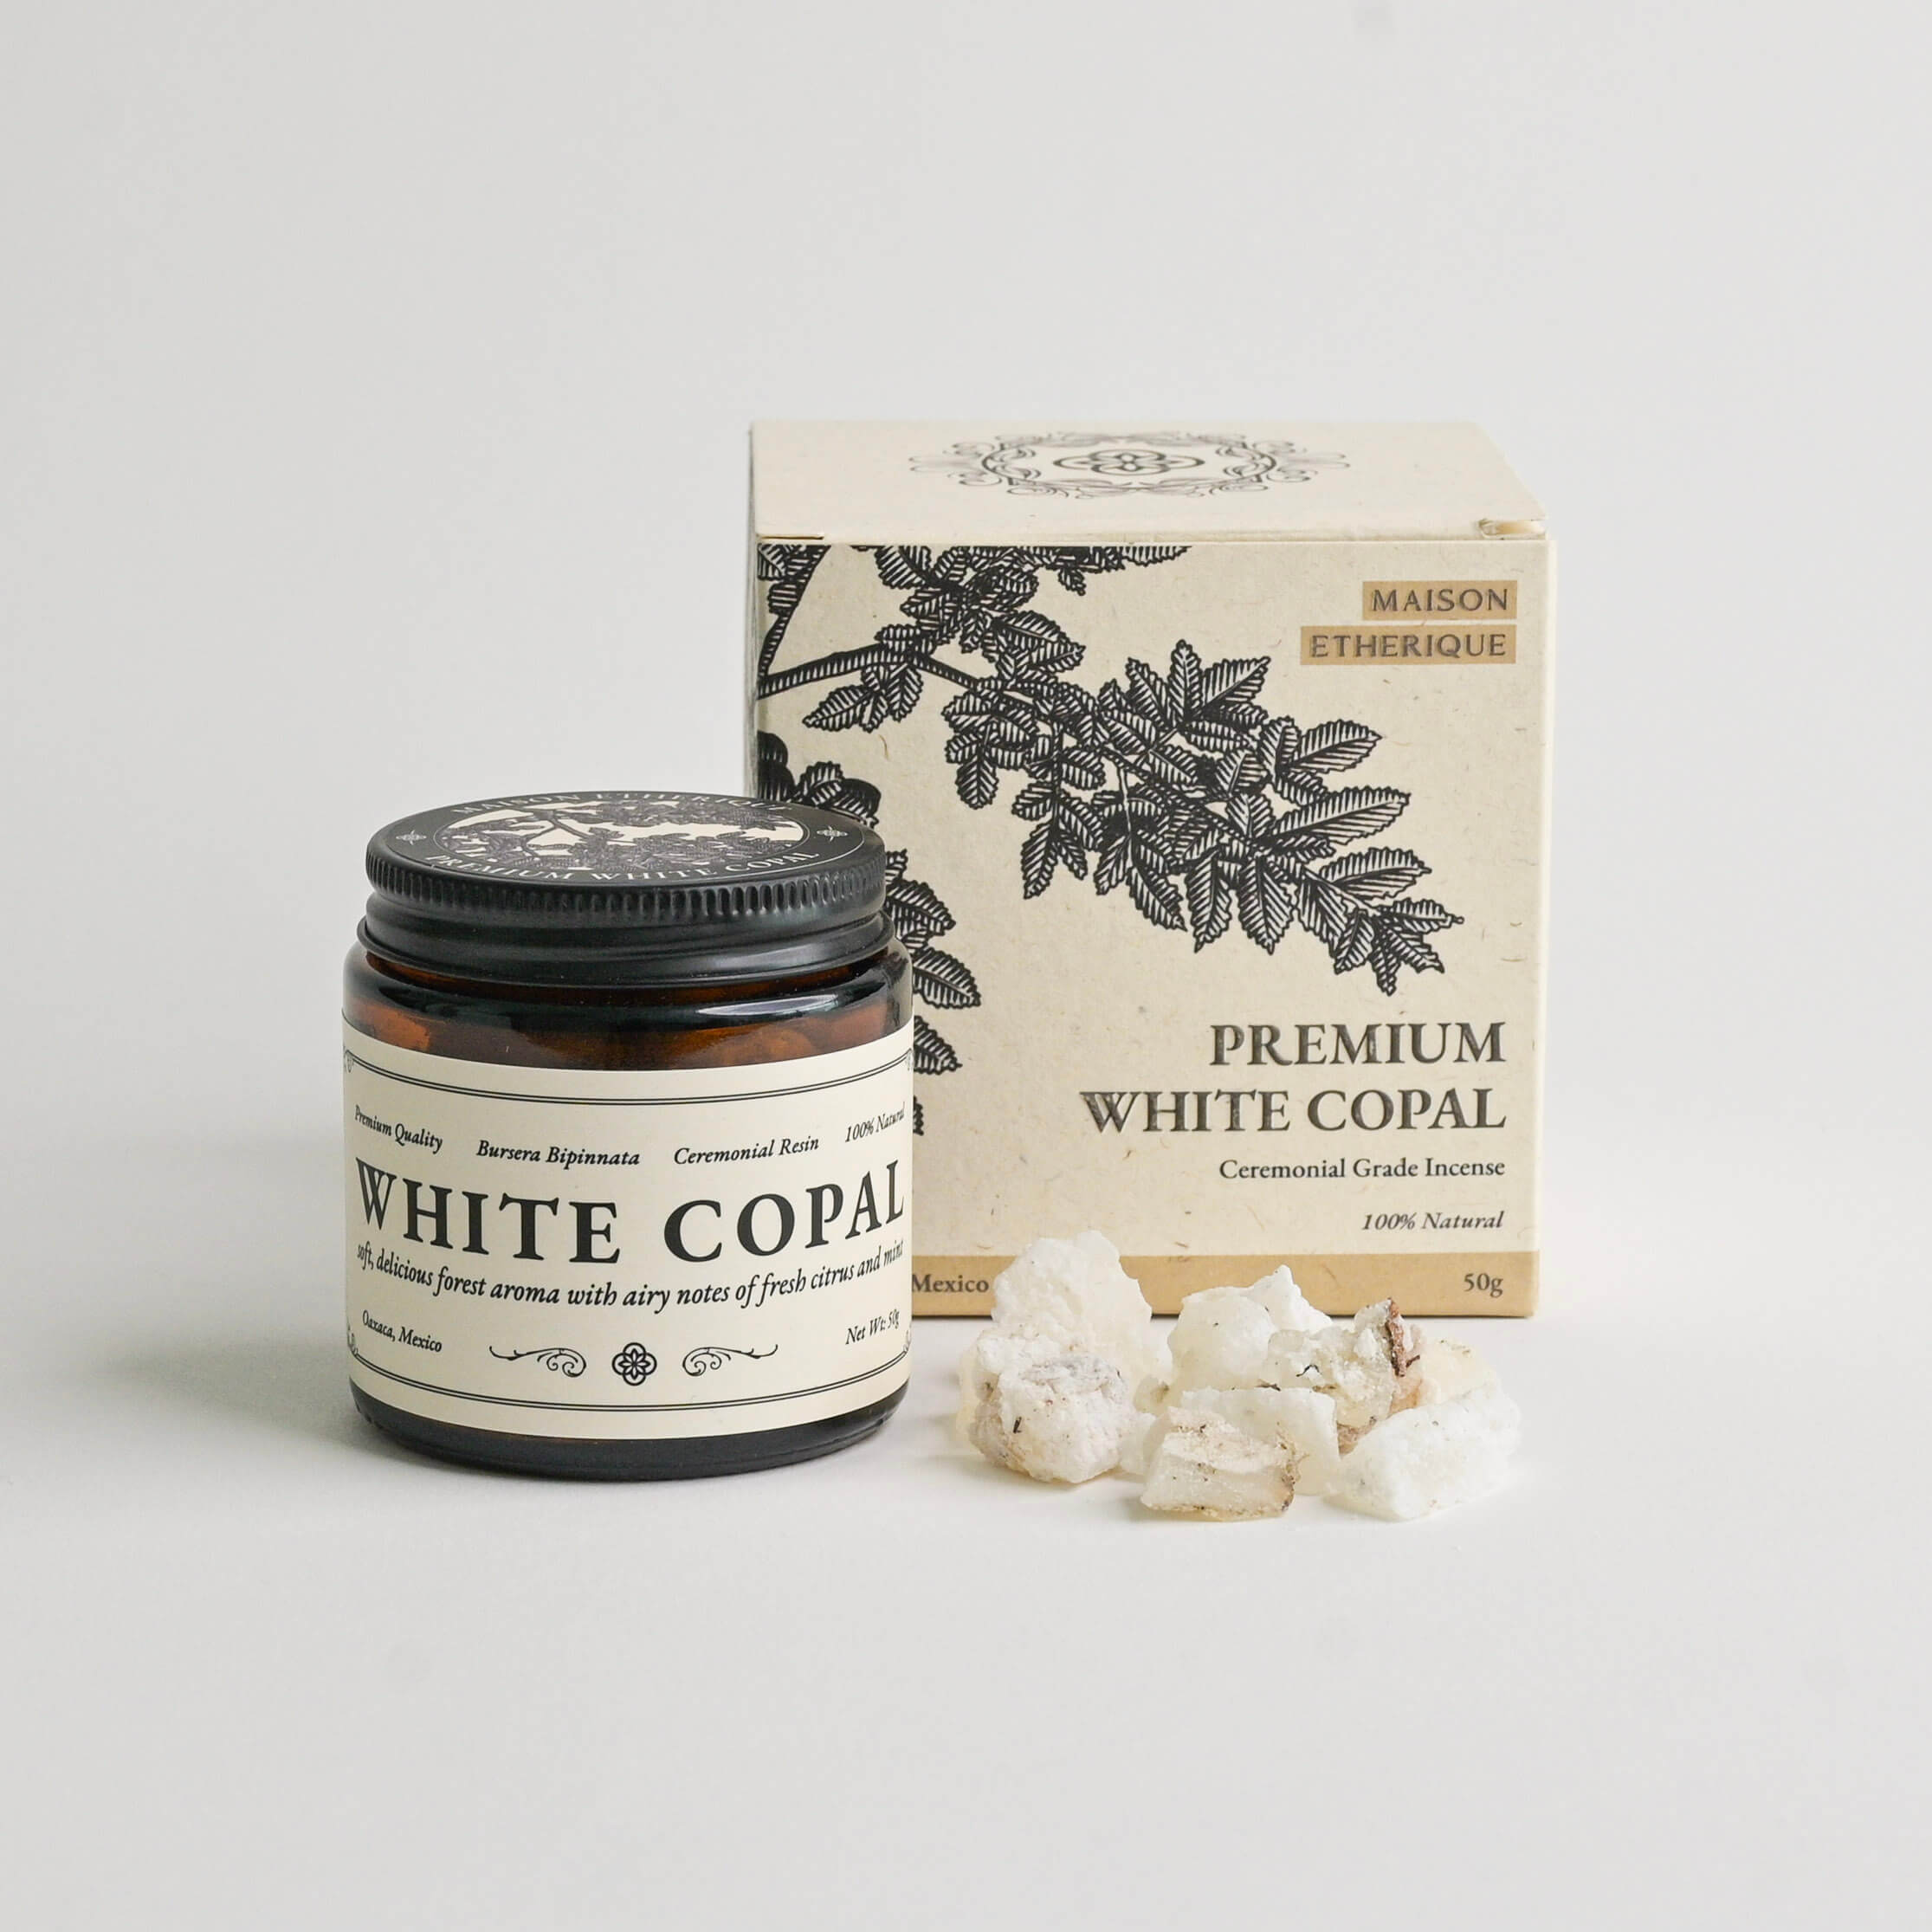 Premium White Copal from Mexico